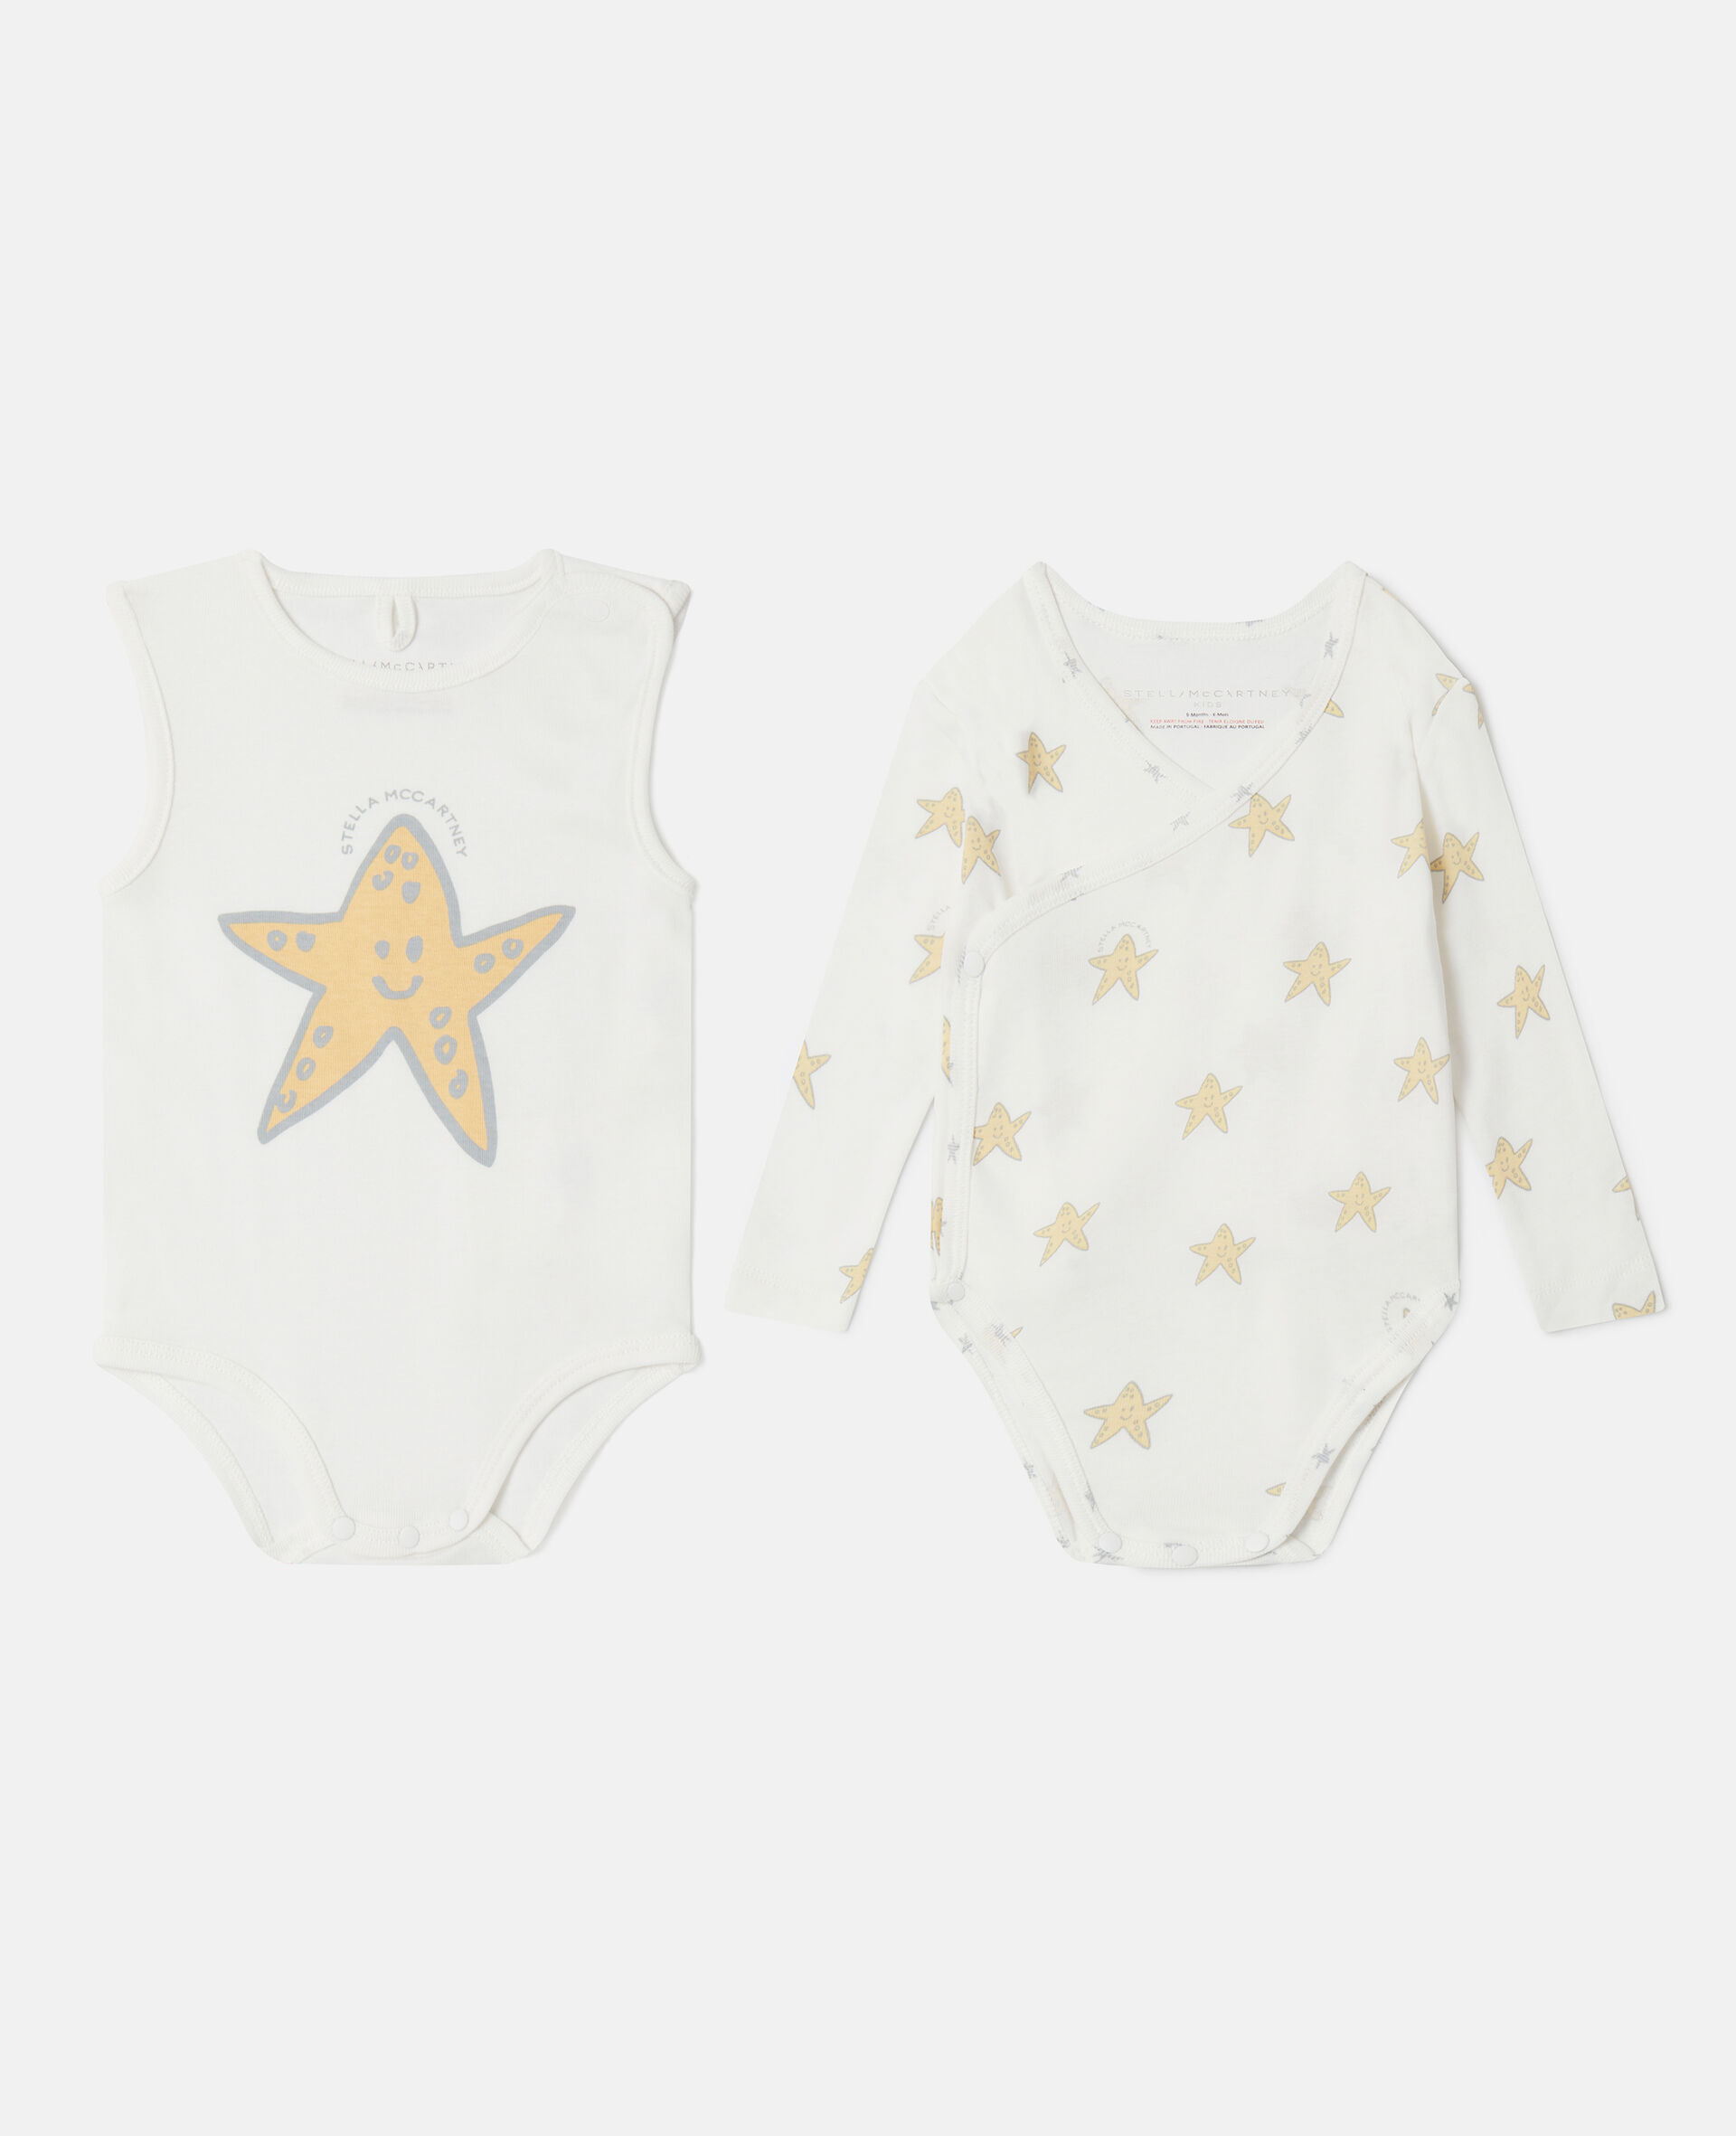 Smiling Stella Star Print Bodysuit and Sleepsuit Set-Fantasia-large image number 0